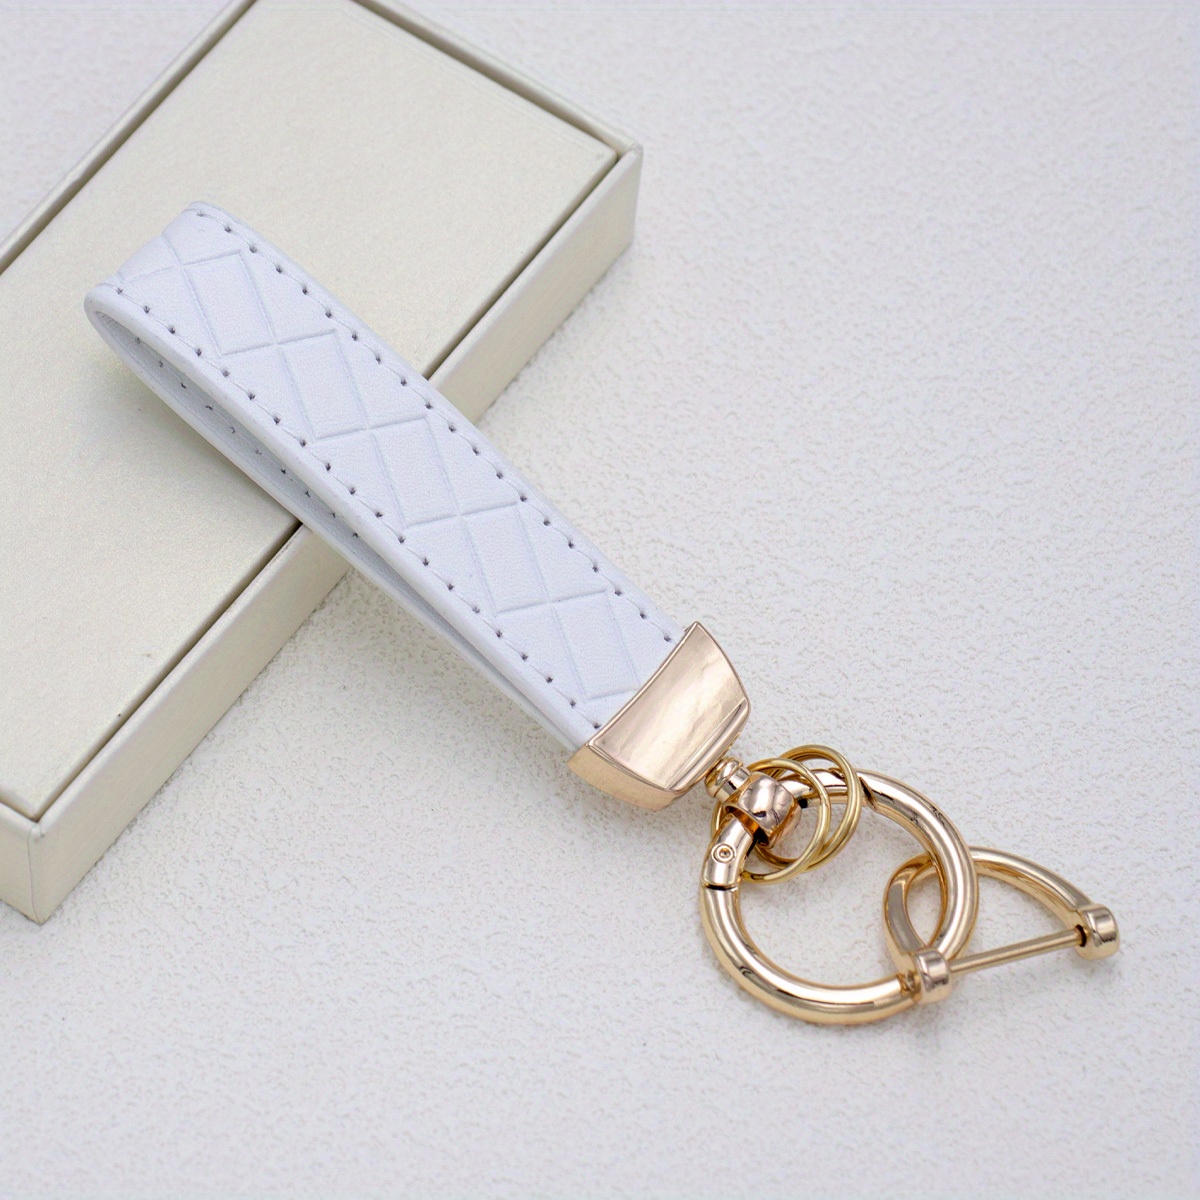 Louis Vuitton Inspired Key Chain- White